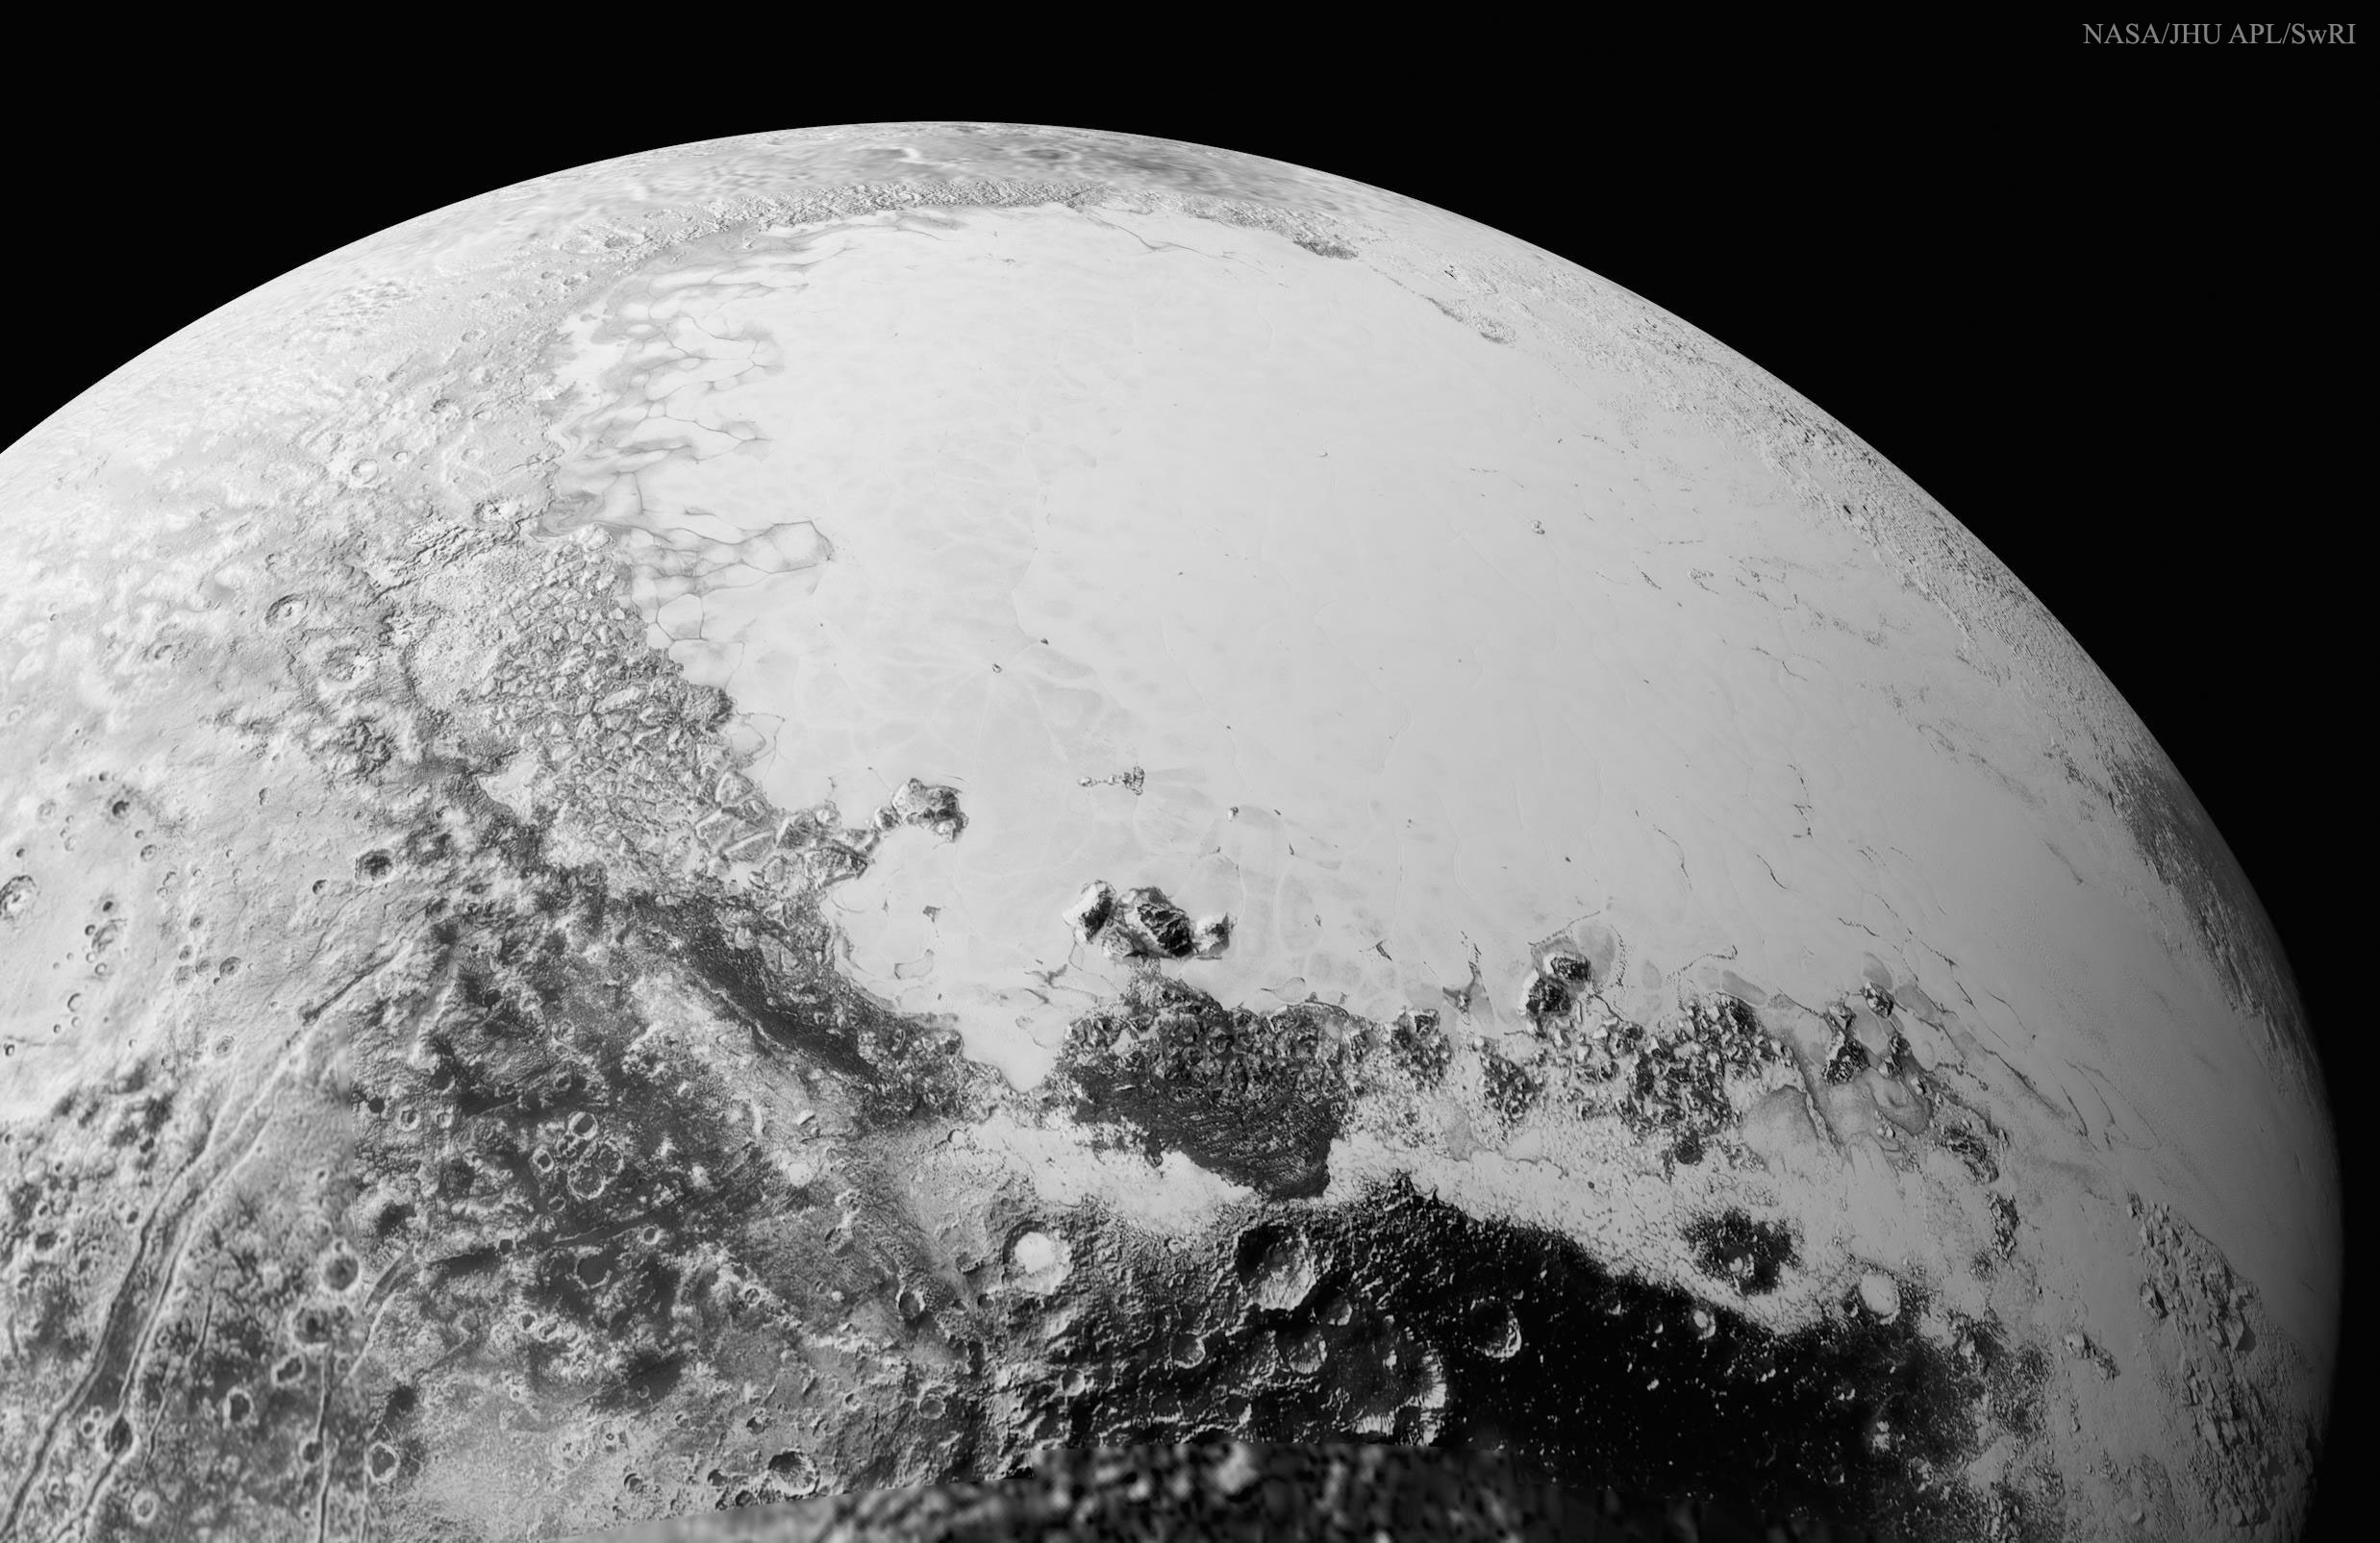 Vol au-dessus de Cthulhu Regio sur Pluton